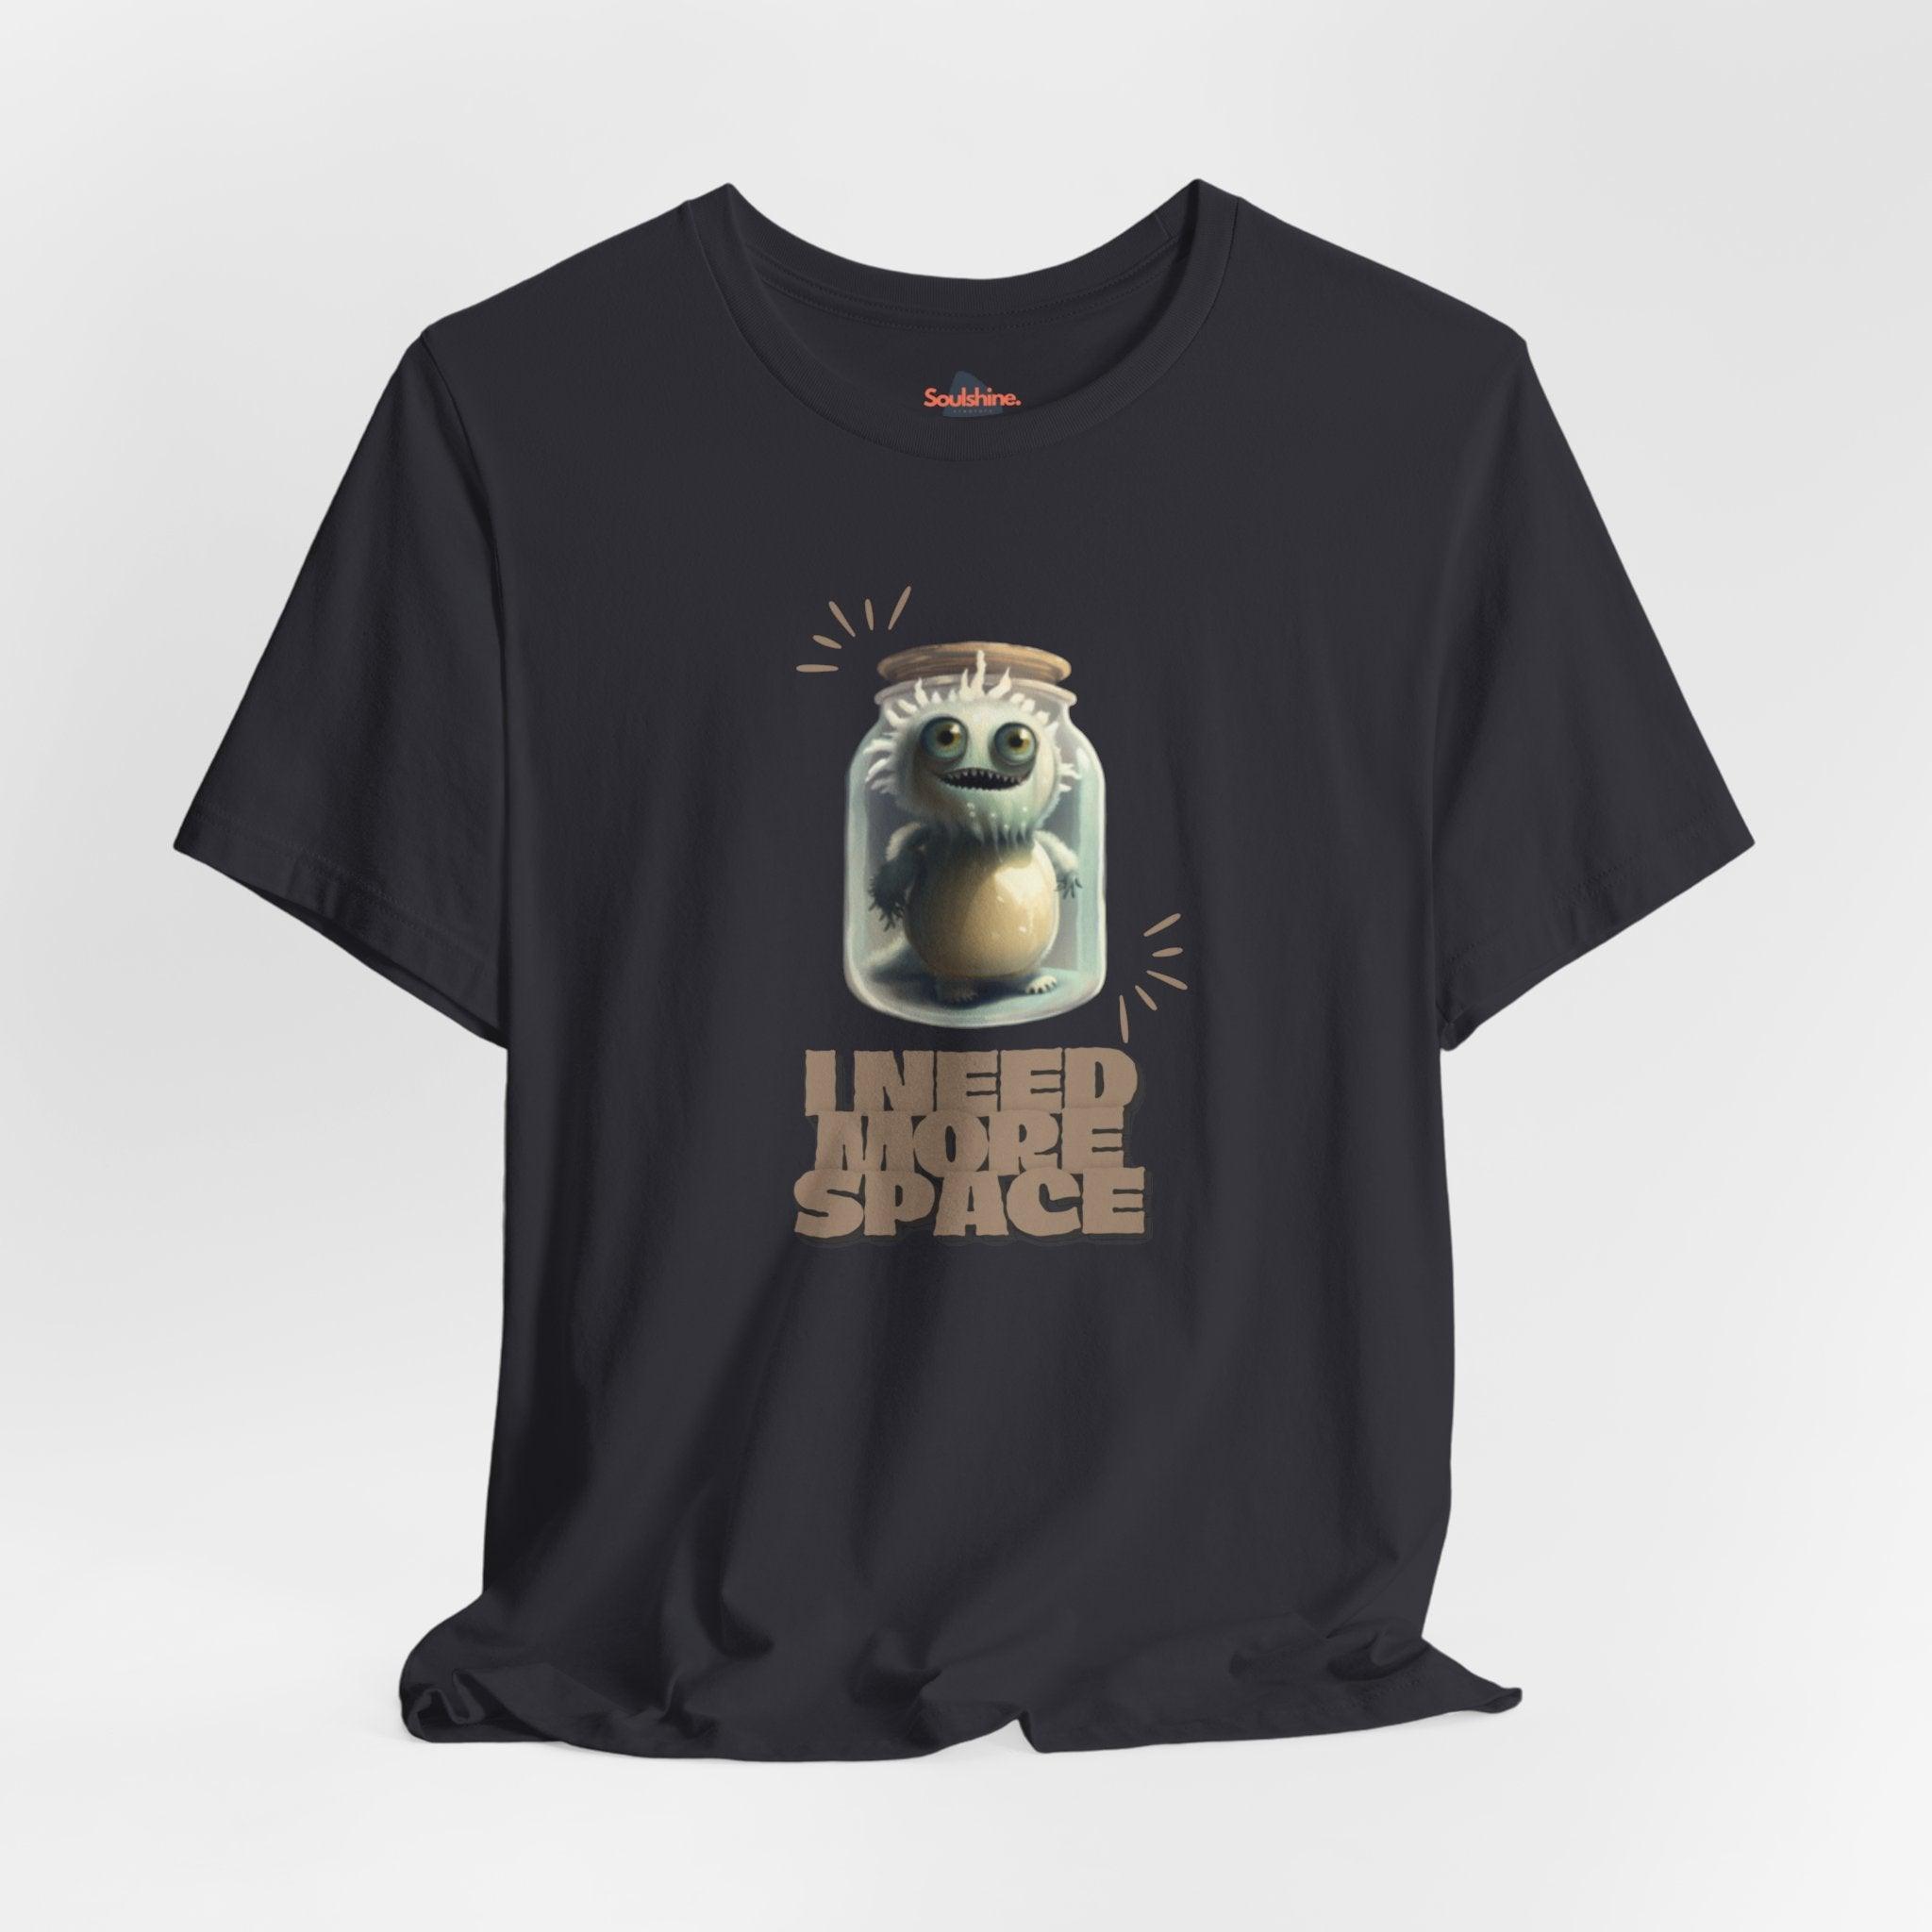 I need more space - Funny T-Shirt - Unisex Jersey Short Sleeve Tee - US Dark Grey S T-Shirt by Soulshinecreators | Soulshinecreators